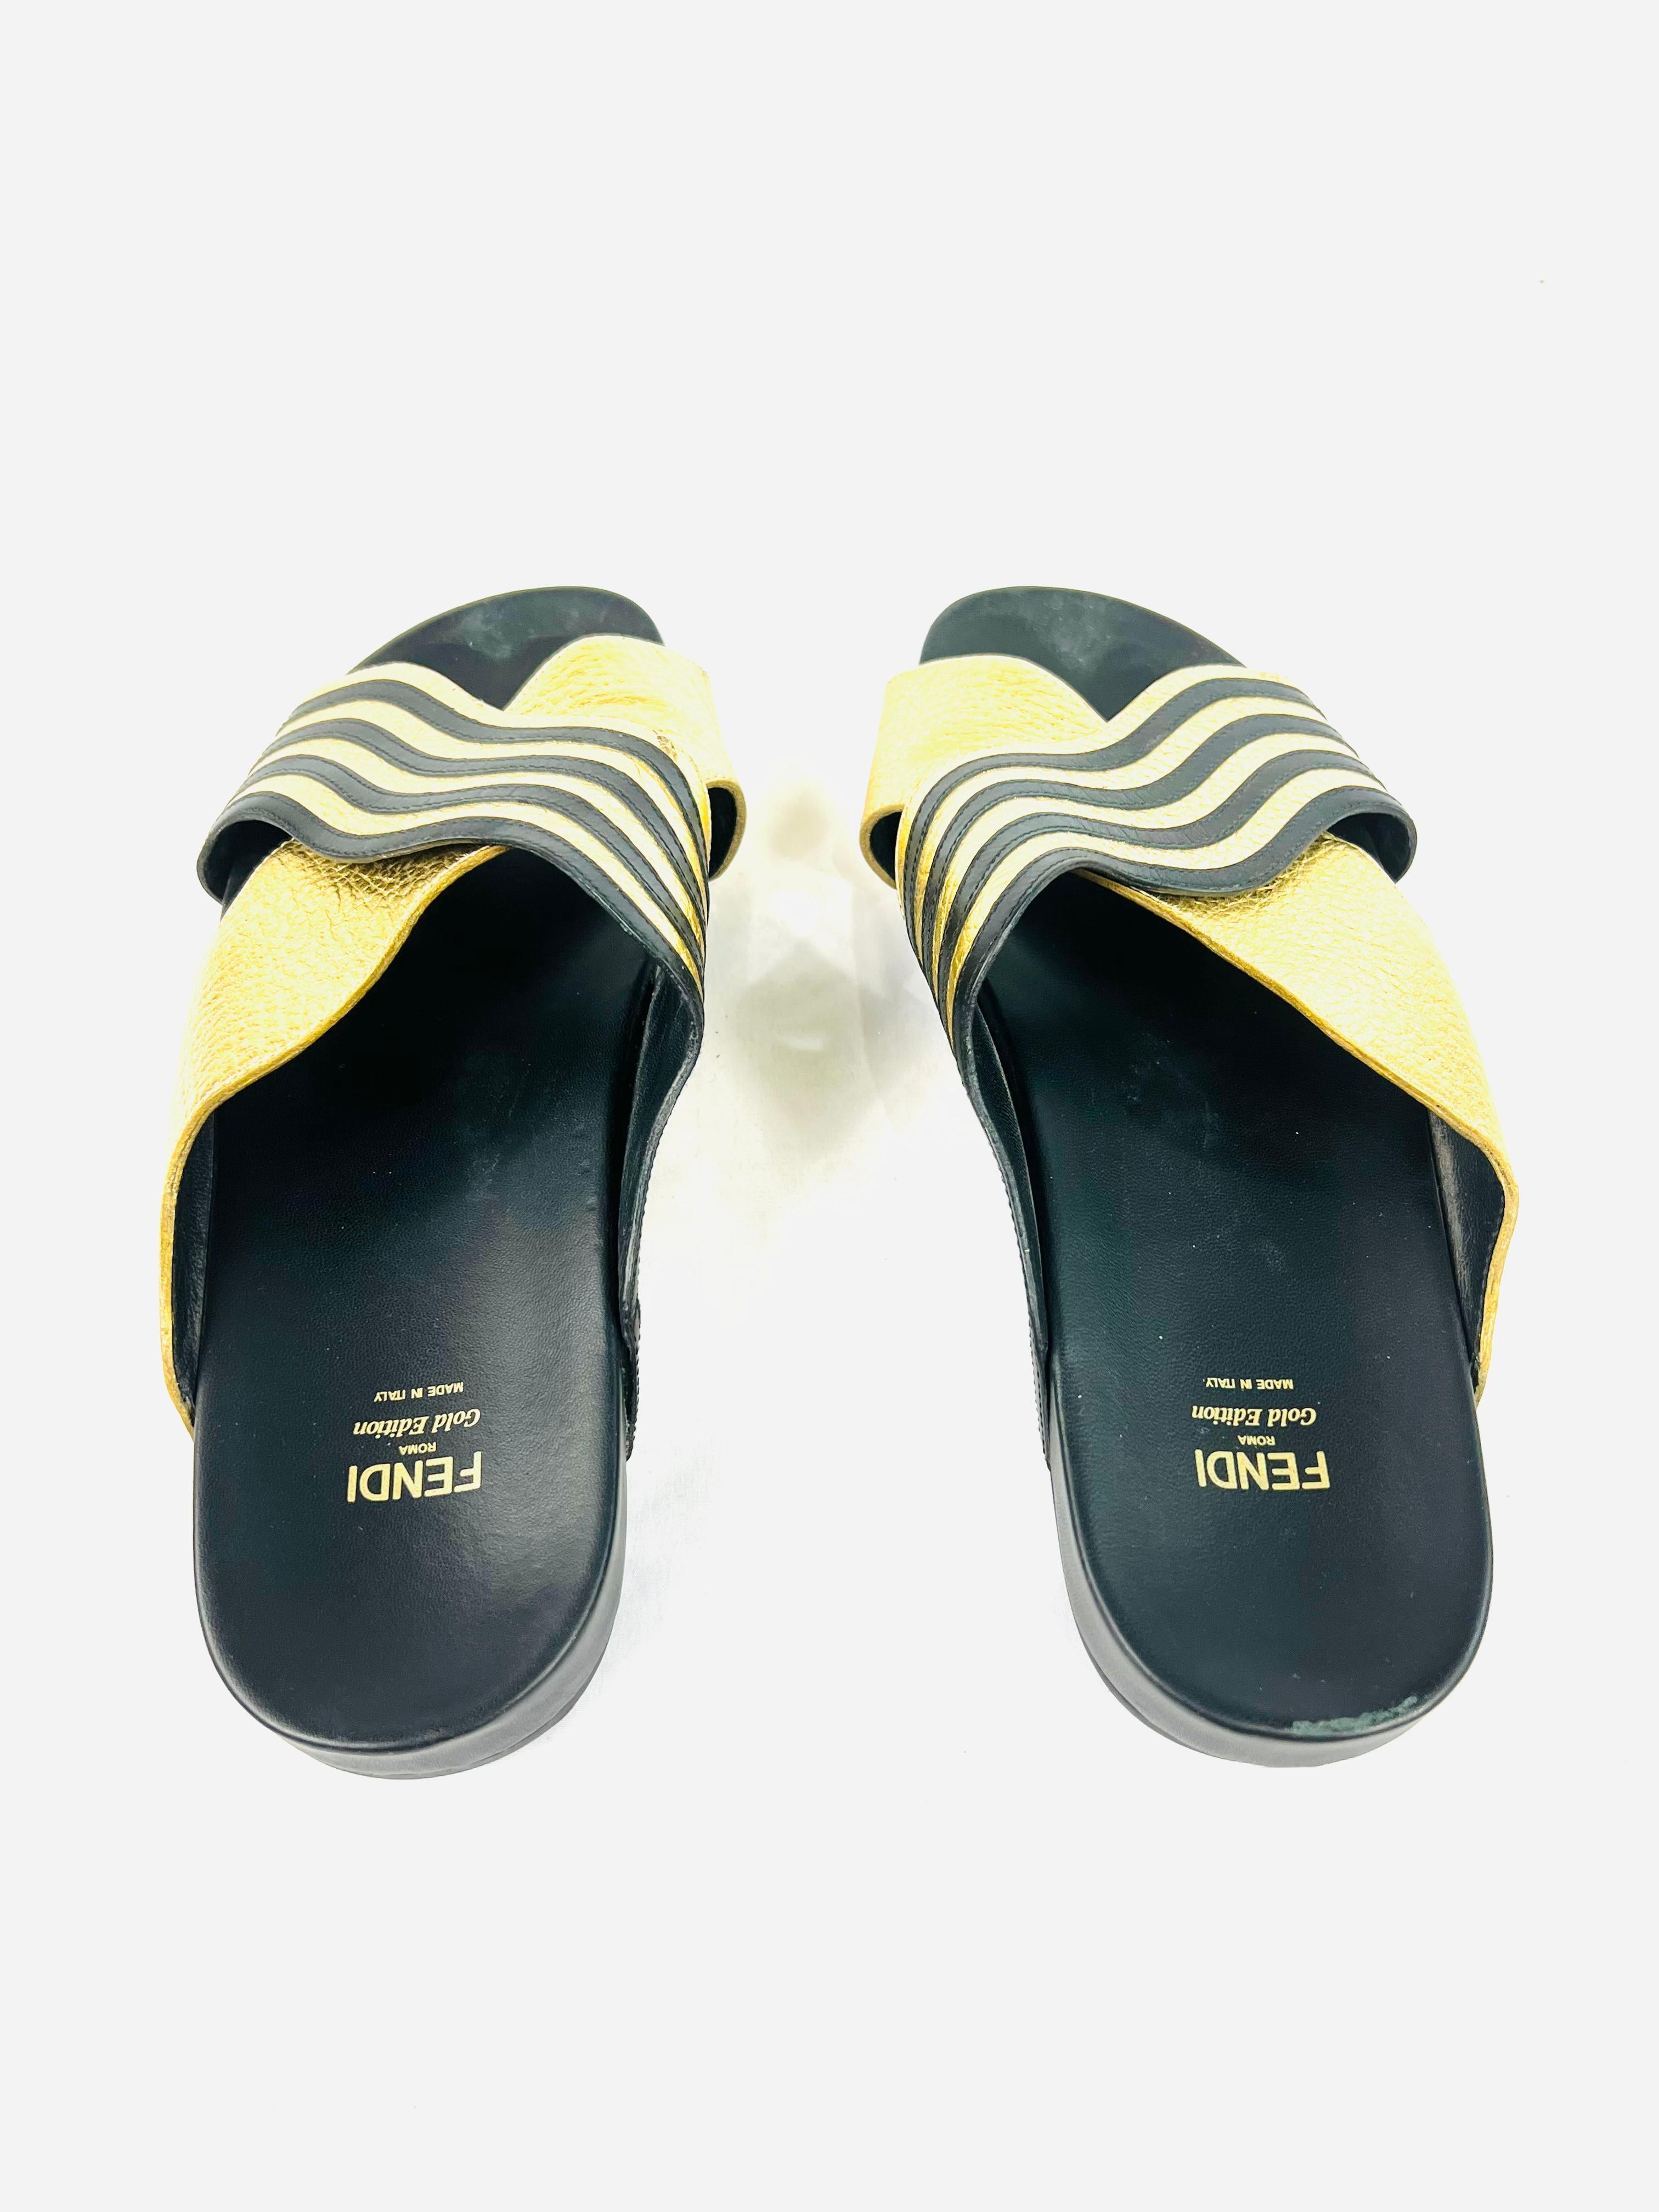 gold fendi sandals